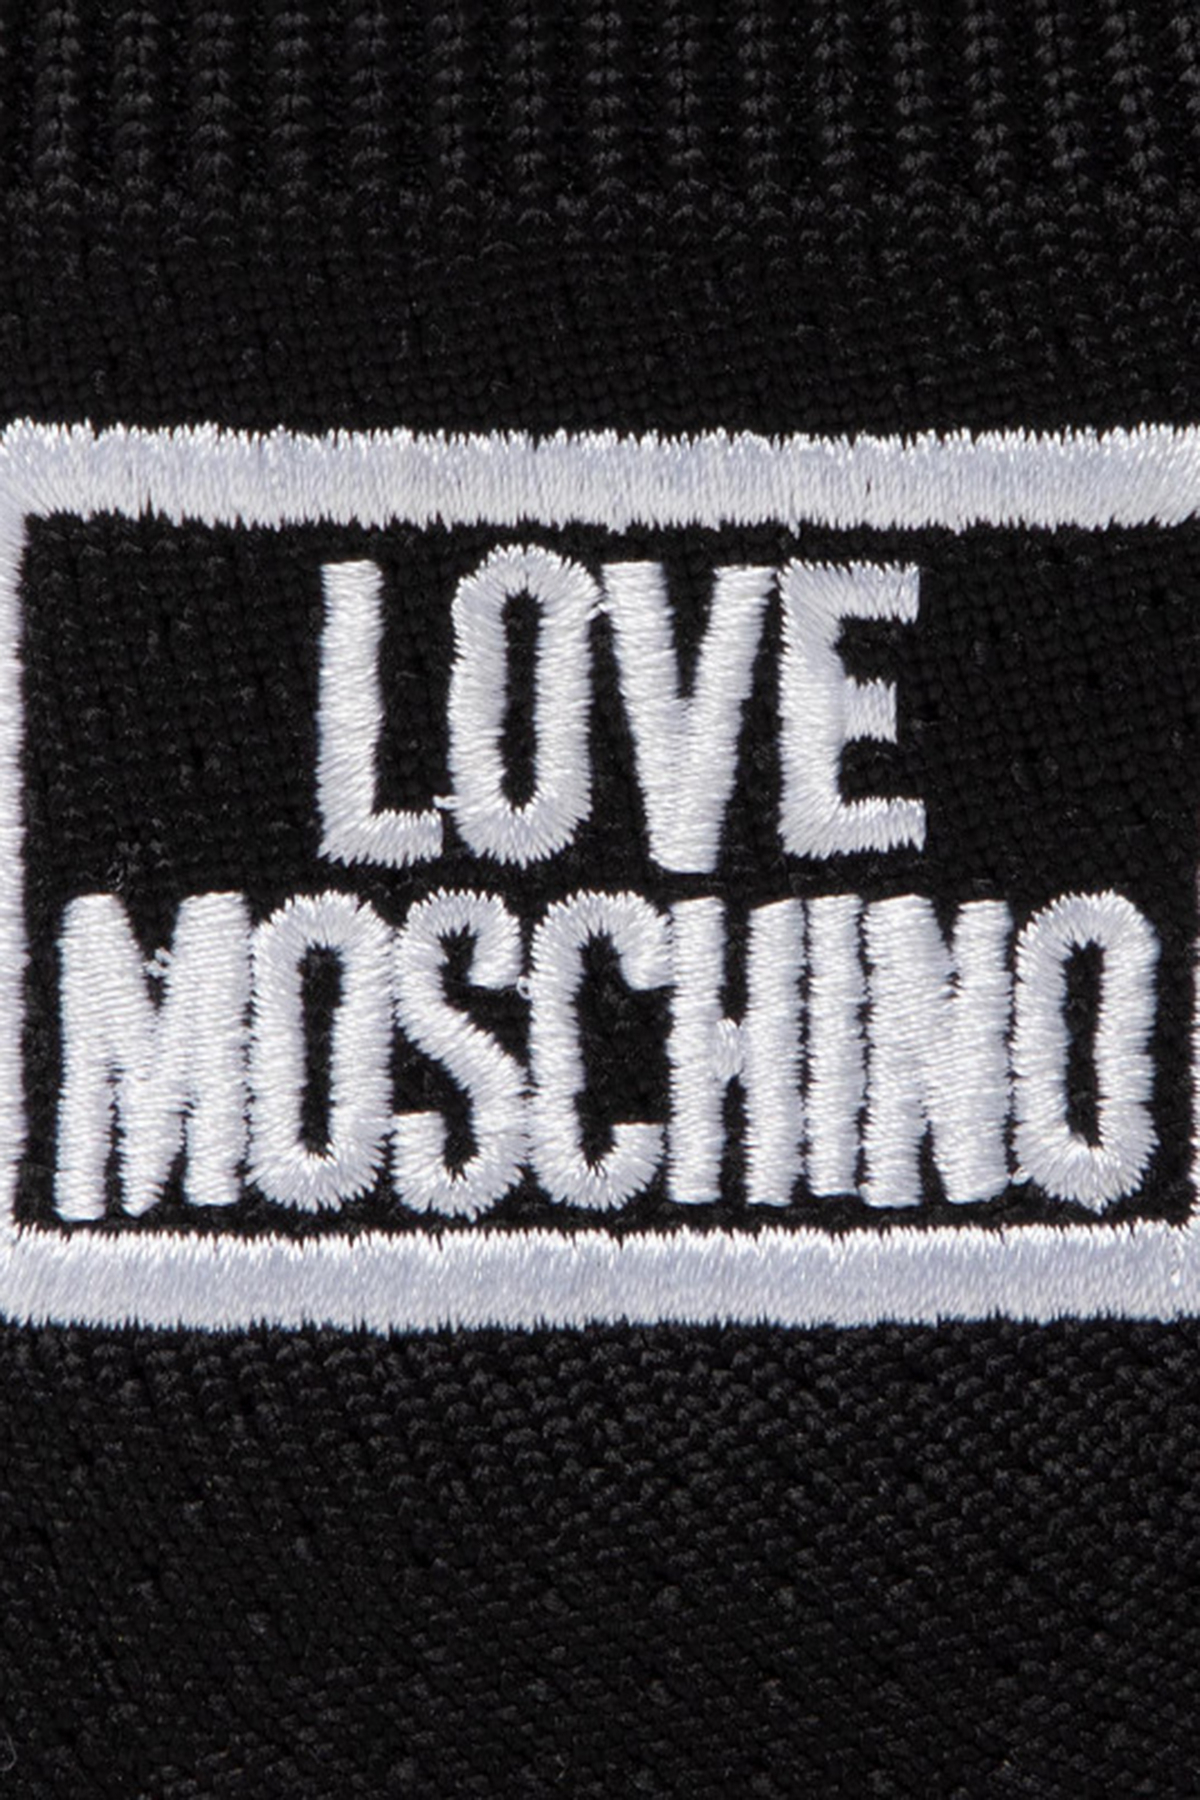 Love Moschino Bilekli Sneaker Bayan Ayakkabı JA15433G1FIZ6000 SİYAH